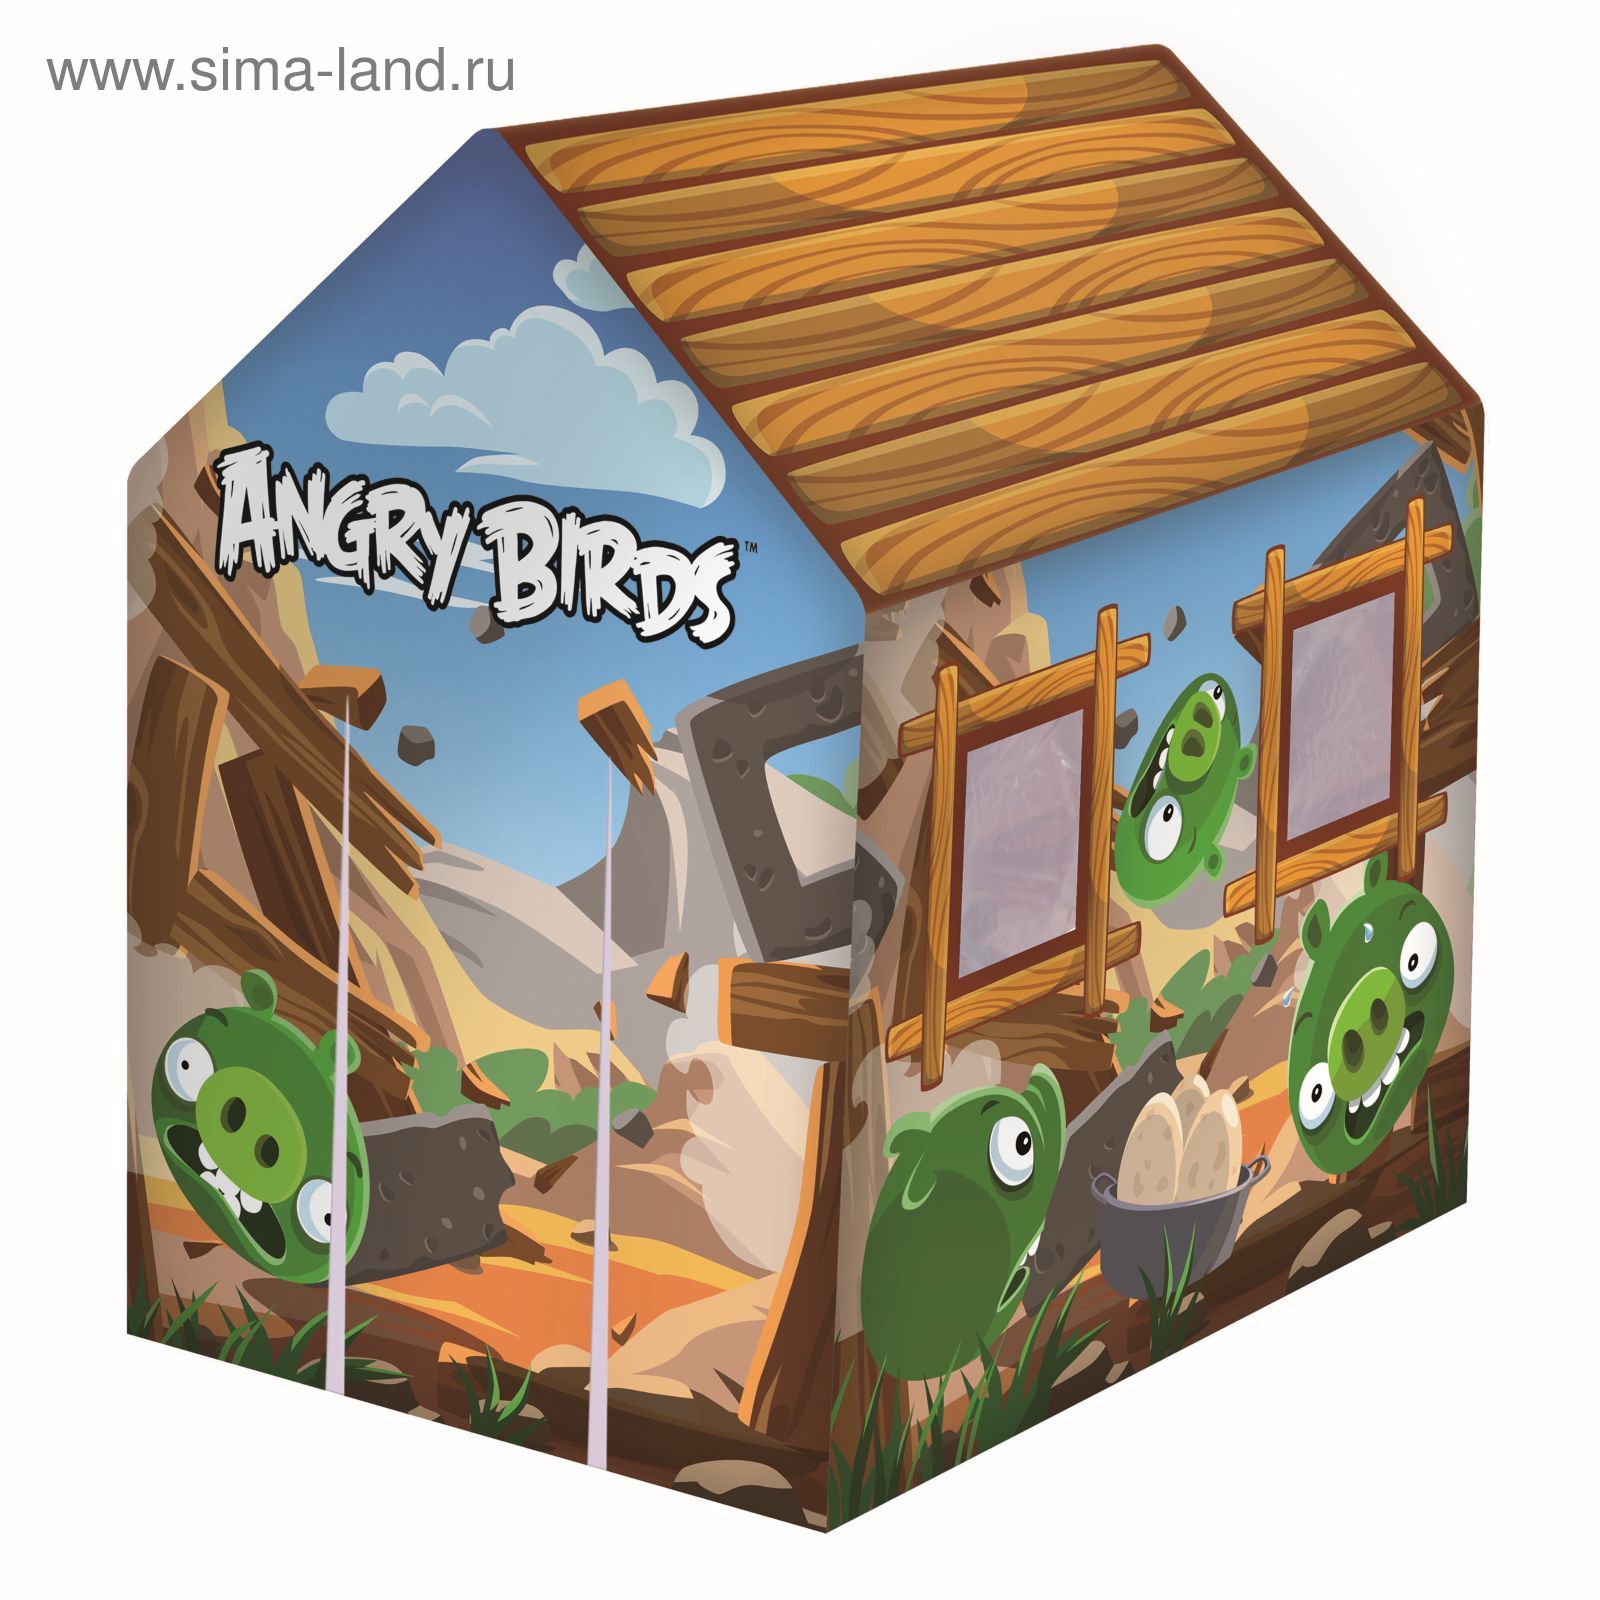 Игровой домик Angry Birds, 102 х 76 х 114 см, 2-6 лет